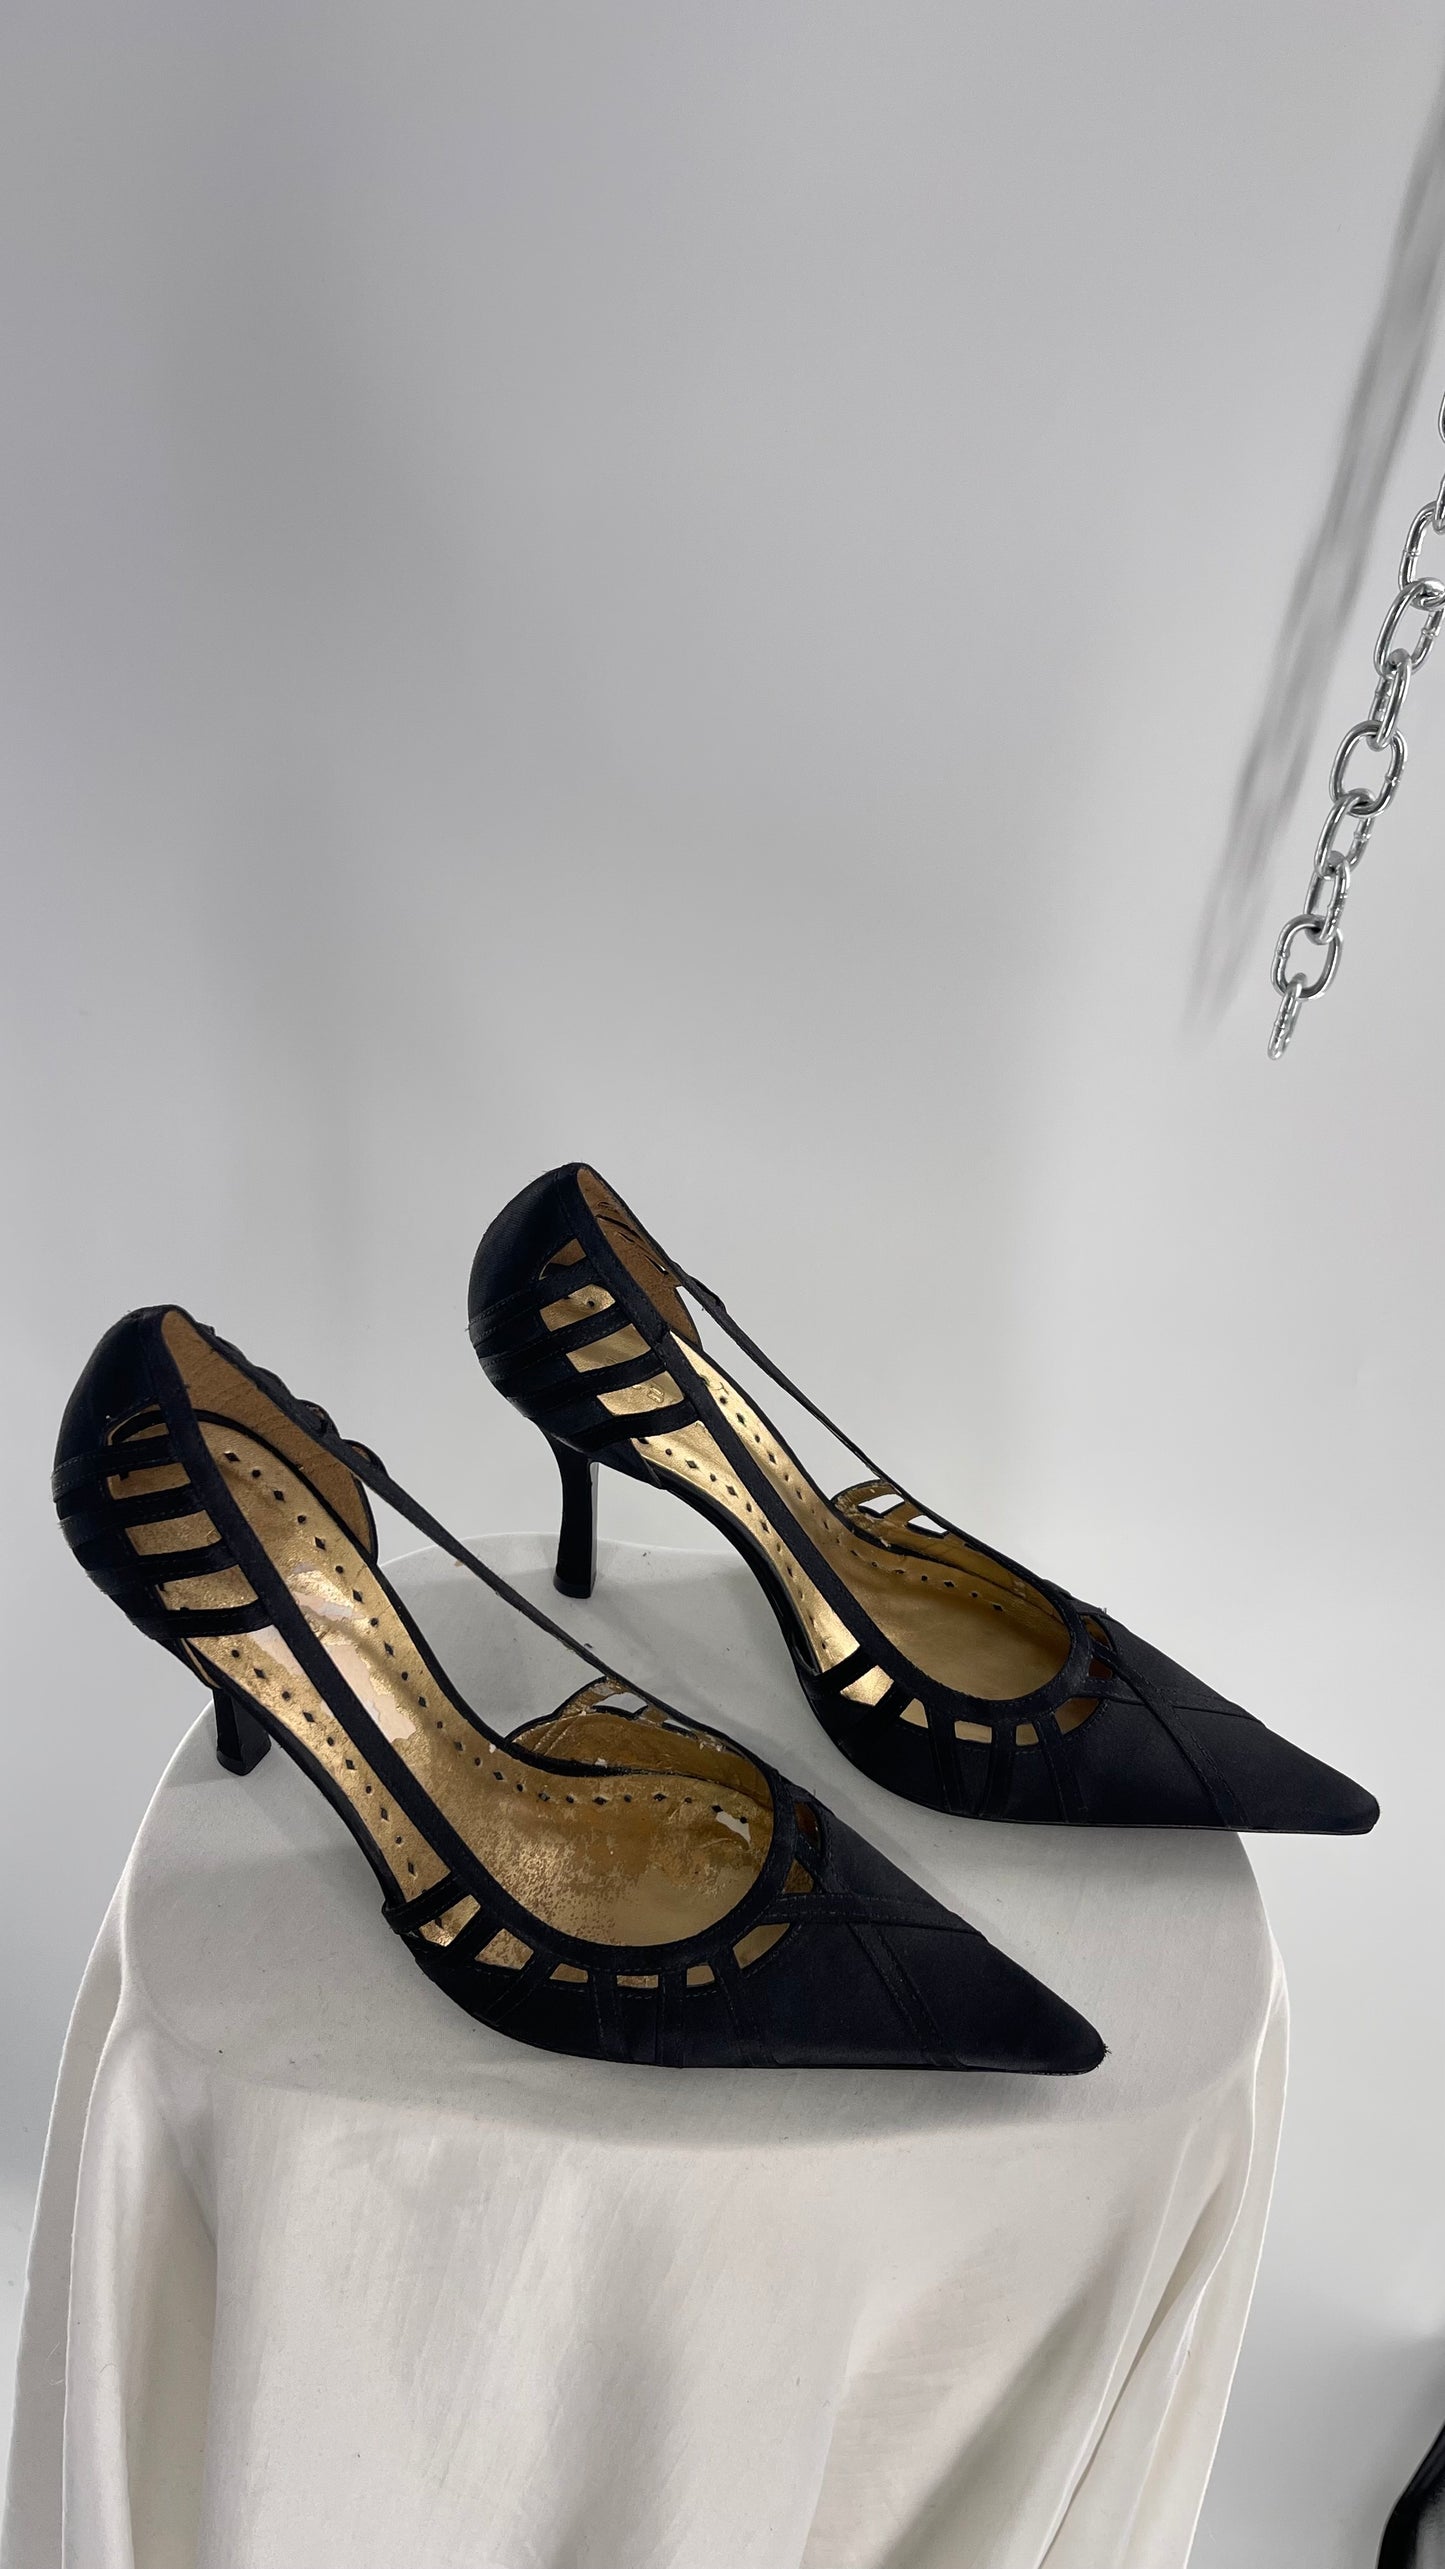 Vintage BCBGirls Black Satin Pointed Toe Heel with Strap Detailing (9.5)